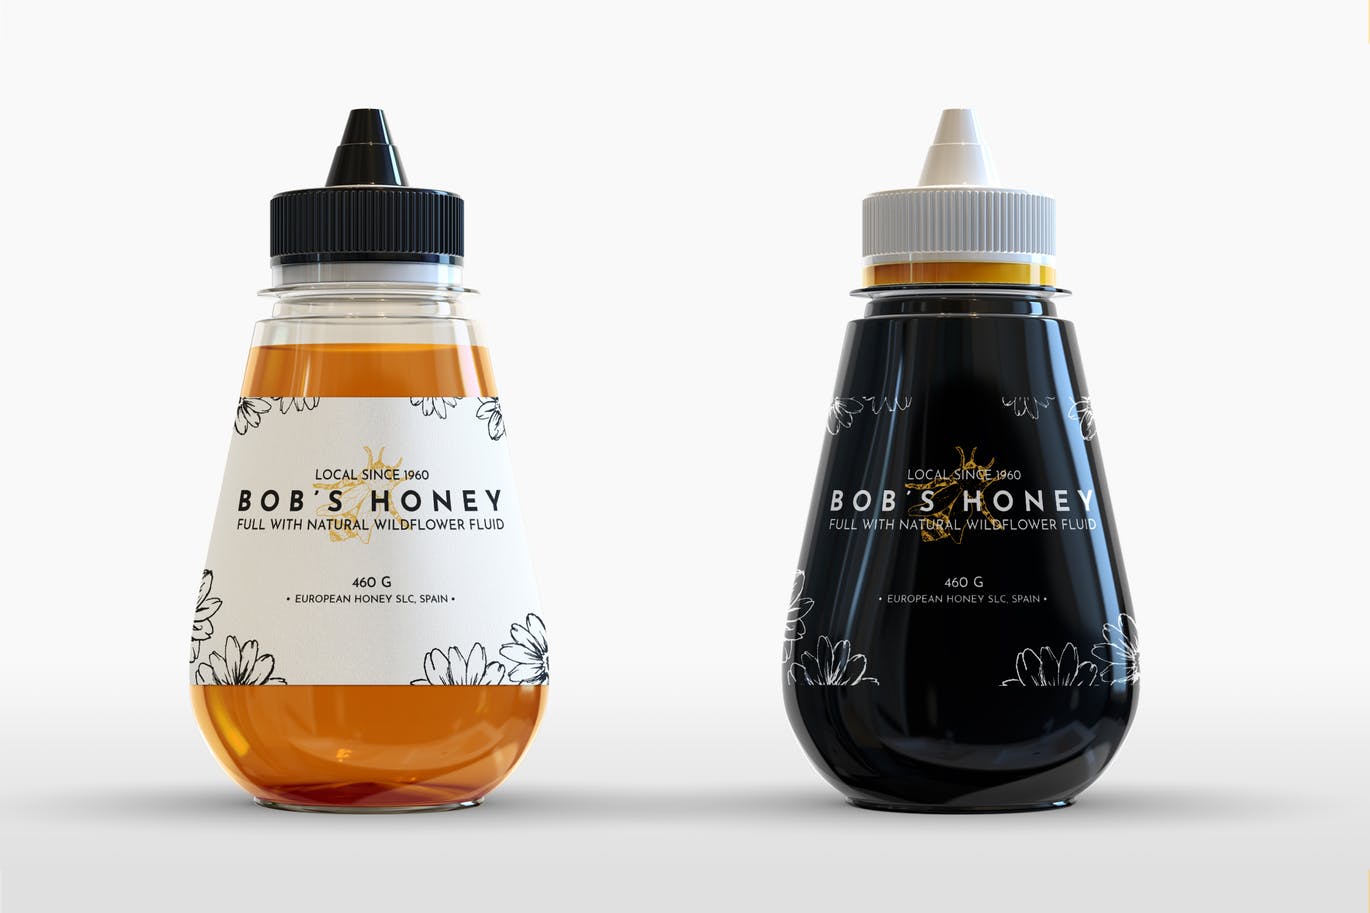 Download 20 Super Realistic Honey Jar Psd Mockups Decolore Net Yellowimages Mockups